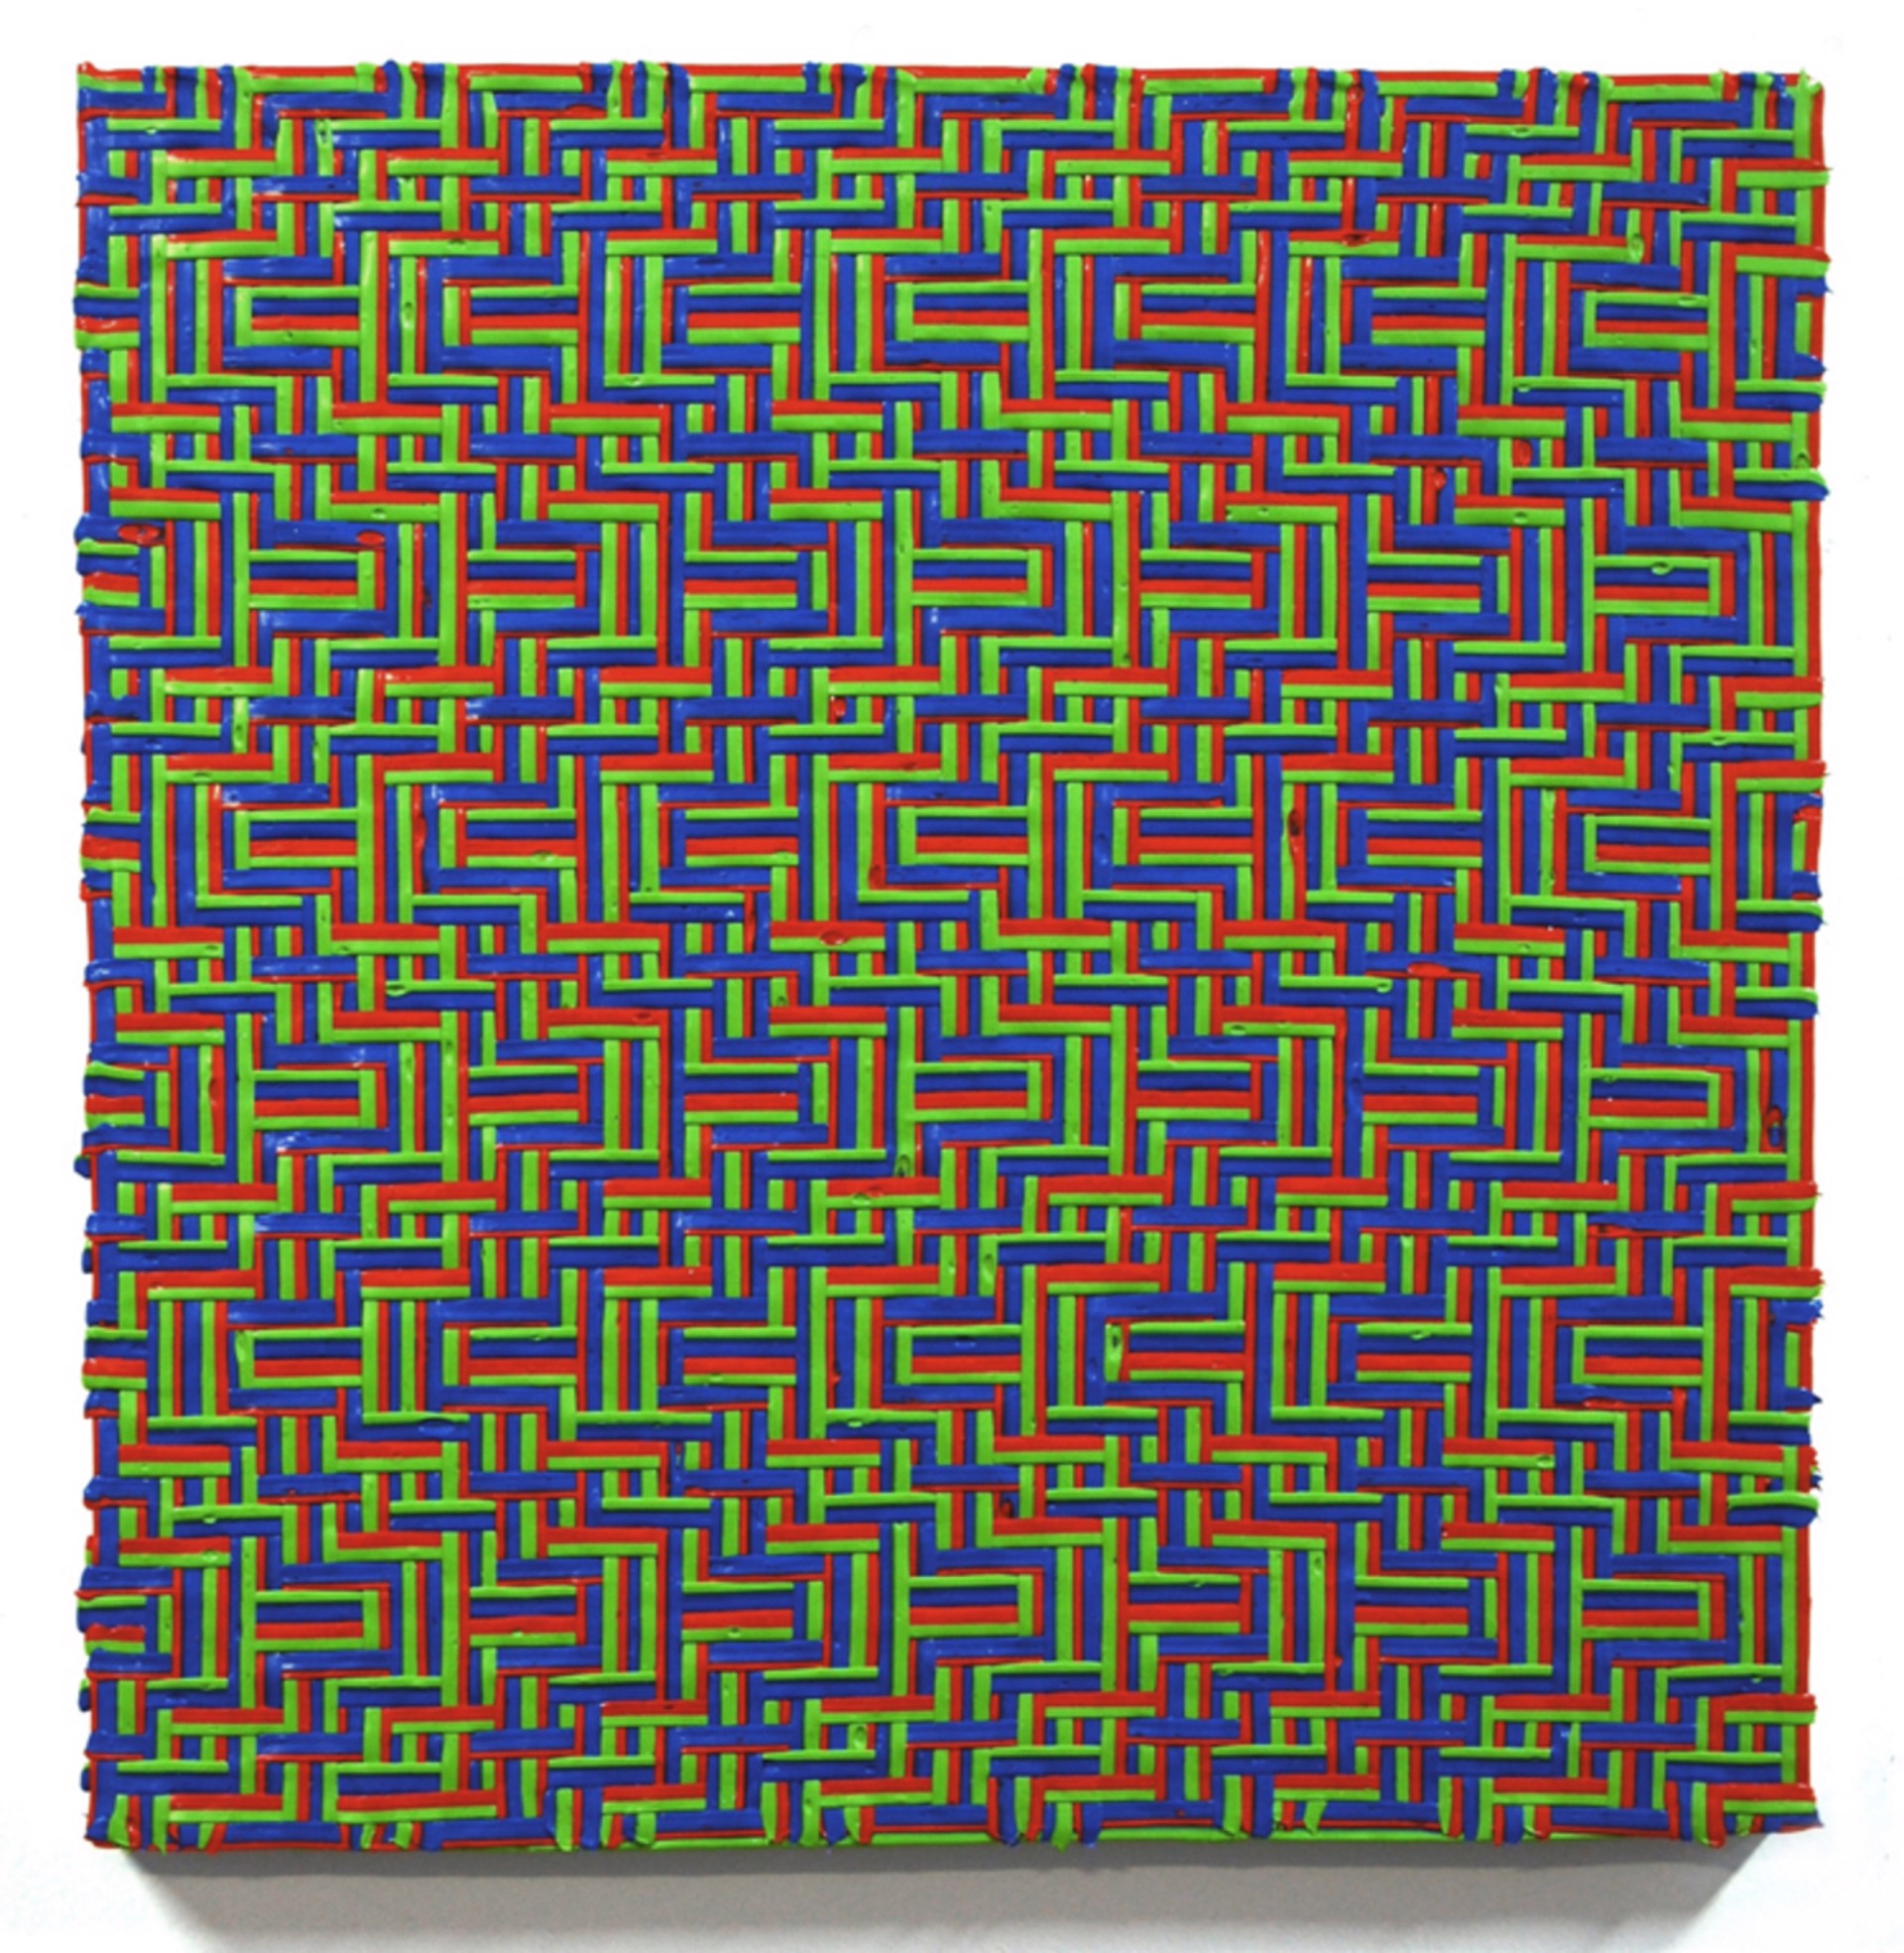 RGB Wave by Robert Davidovitz